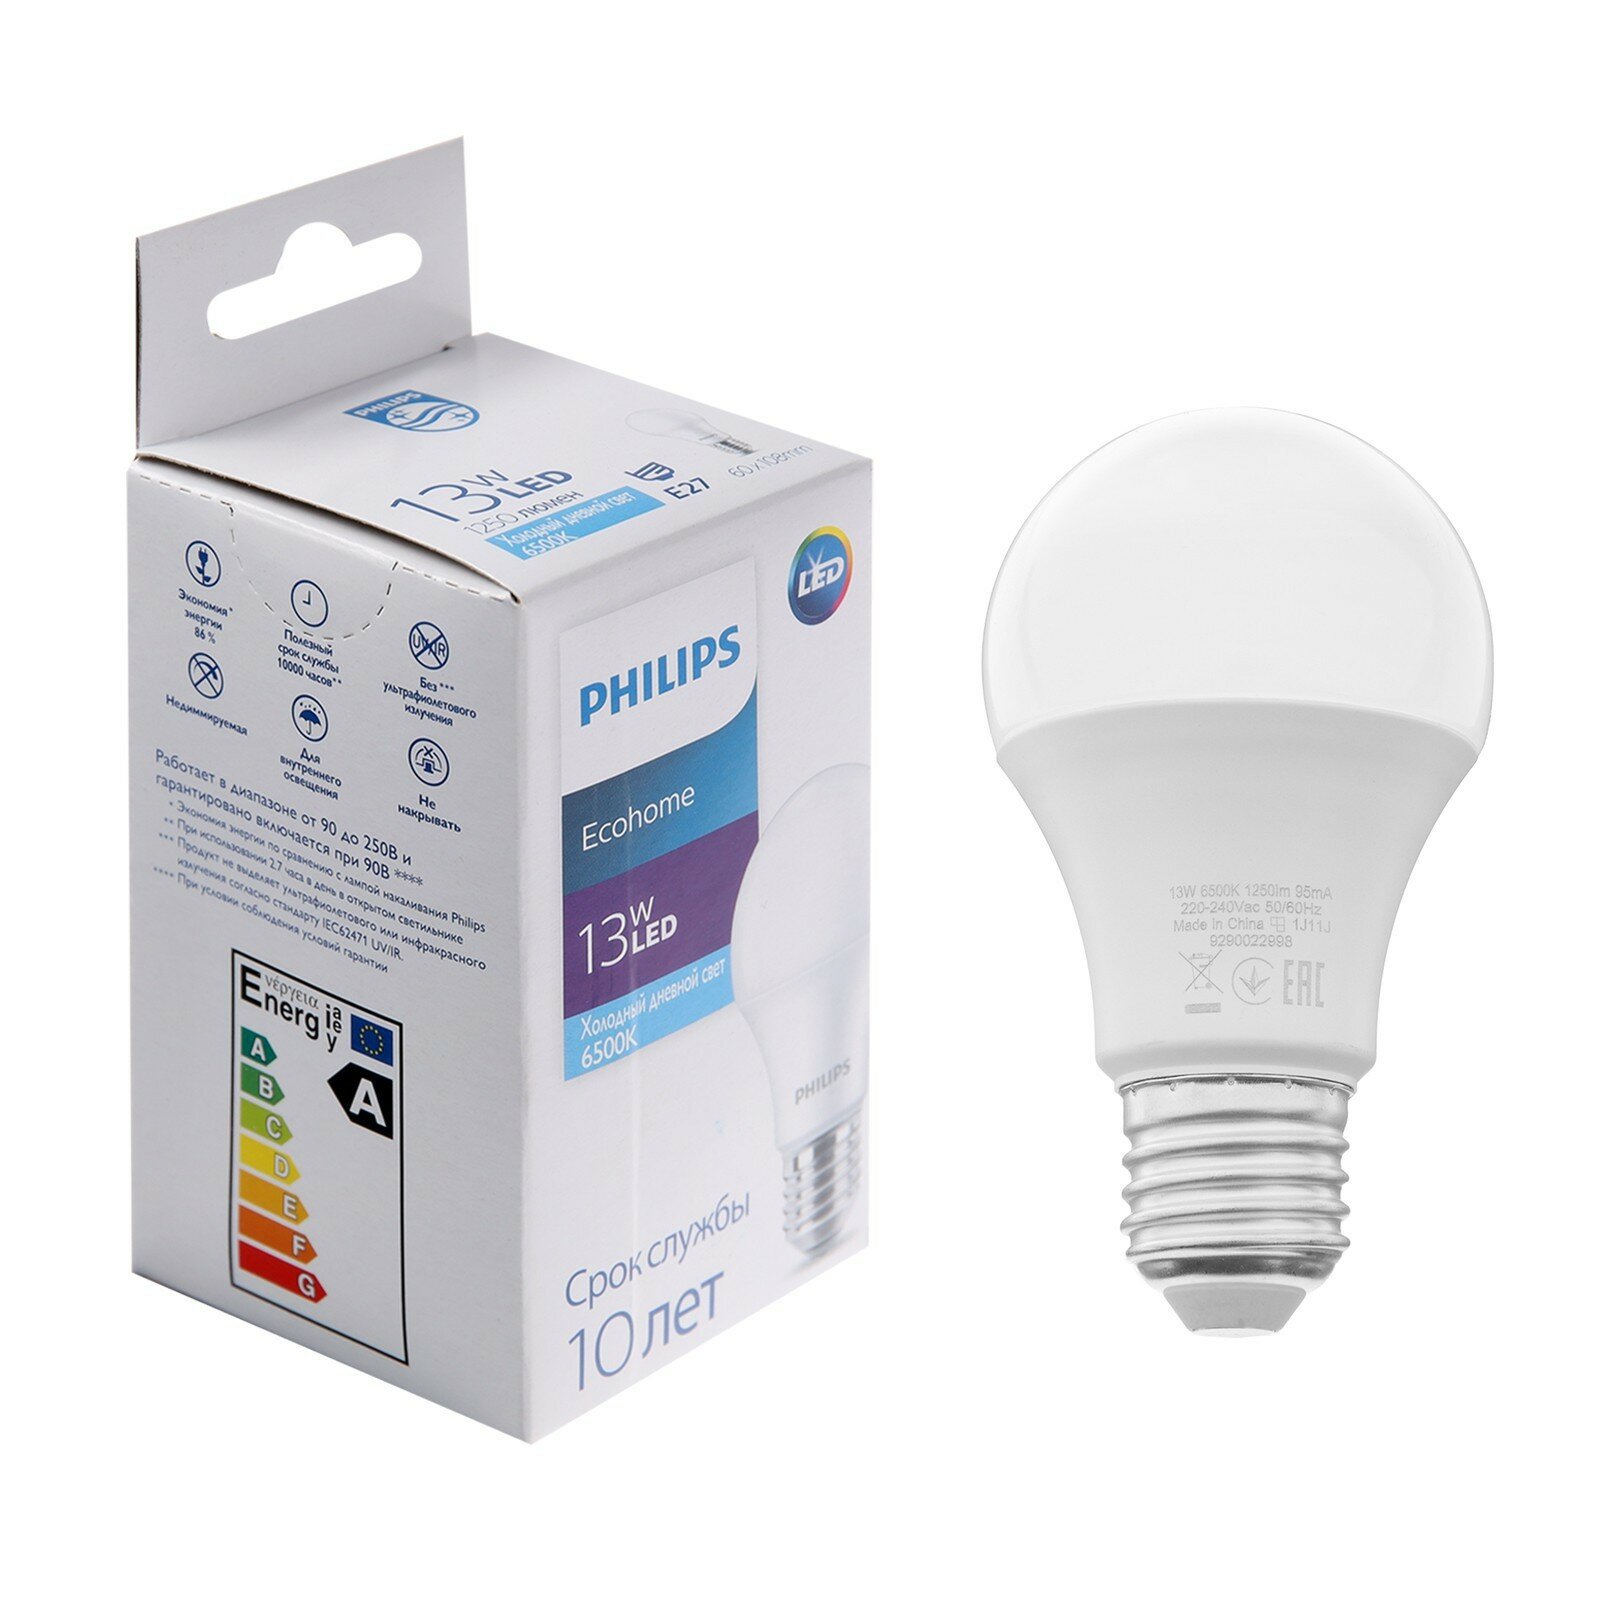 Лампа светодиодная Philips Ecohome Bulb 865, E27, 13 Вт, 6500 К, 1250 Лм, груша 7673400 - фотография № 3